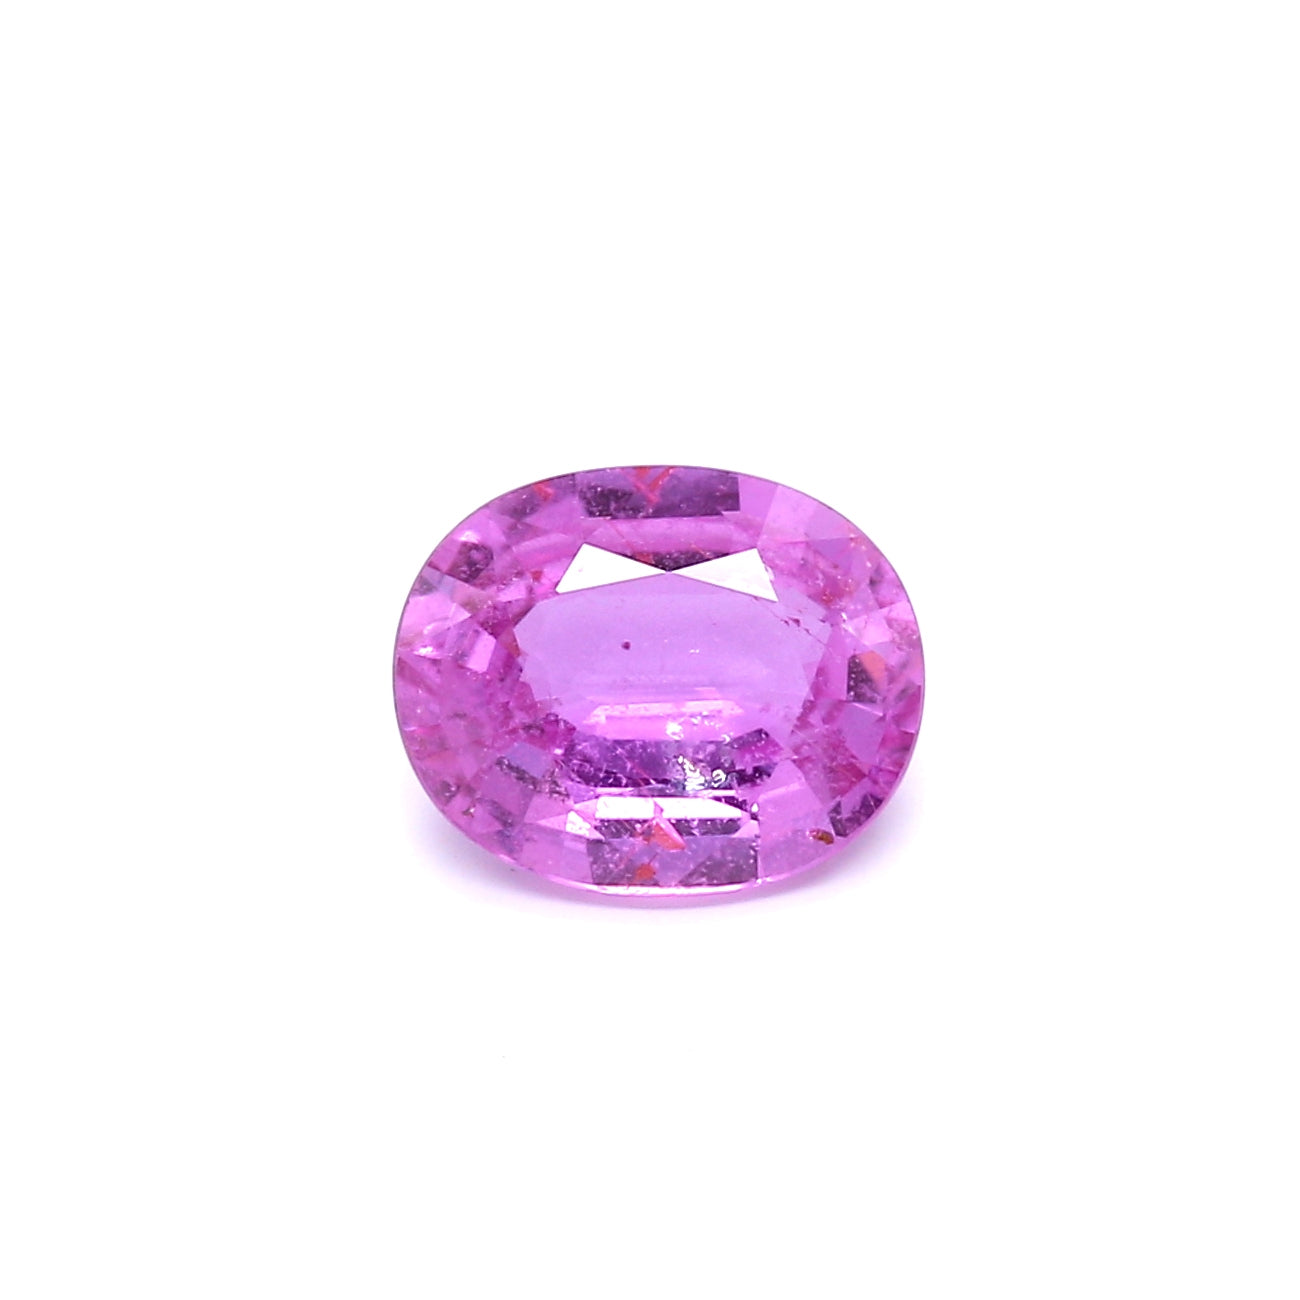 2.36ct Purplish Pink, Oval Sapphire, Heated, Madagascar - 9.28 x 7.52 x 3.75mm